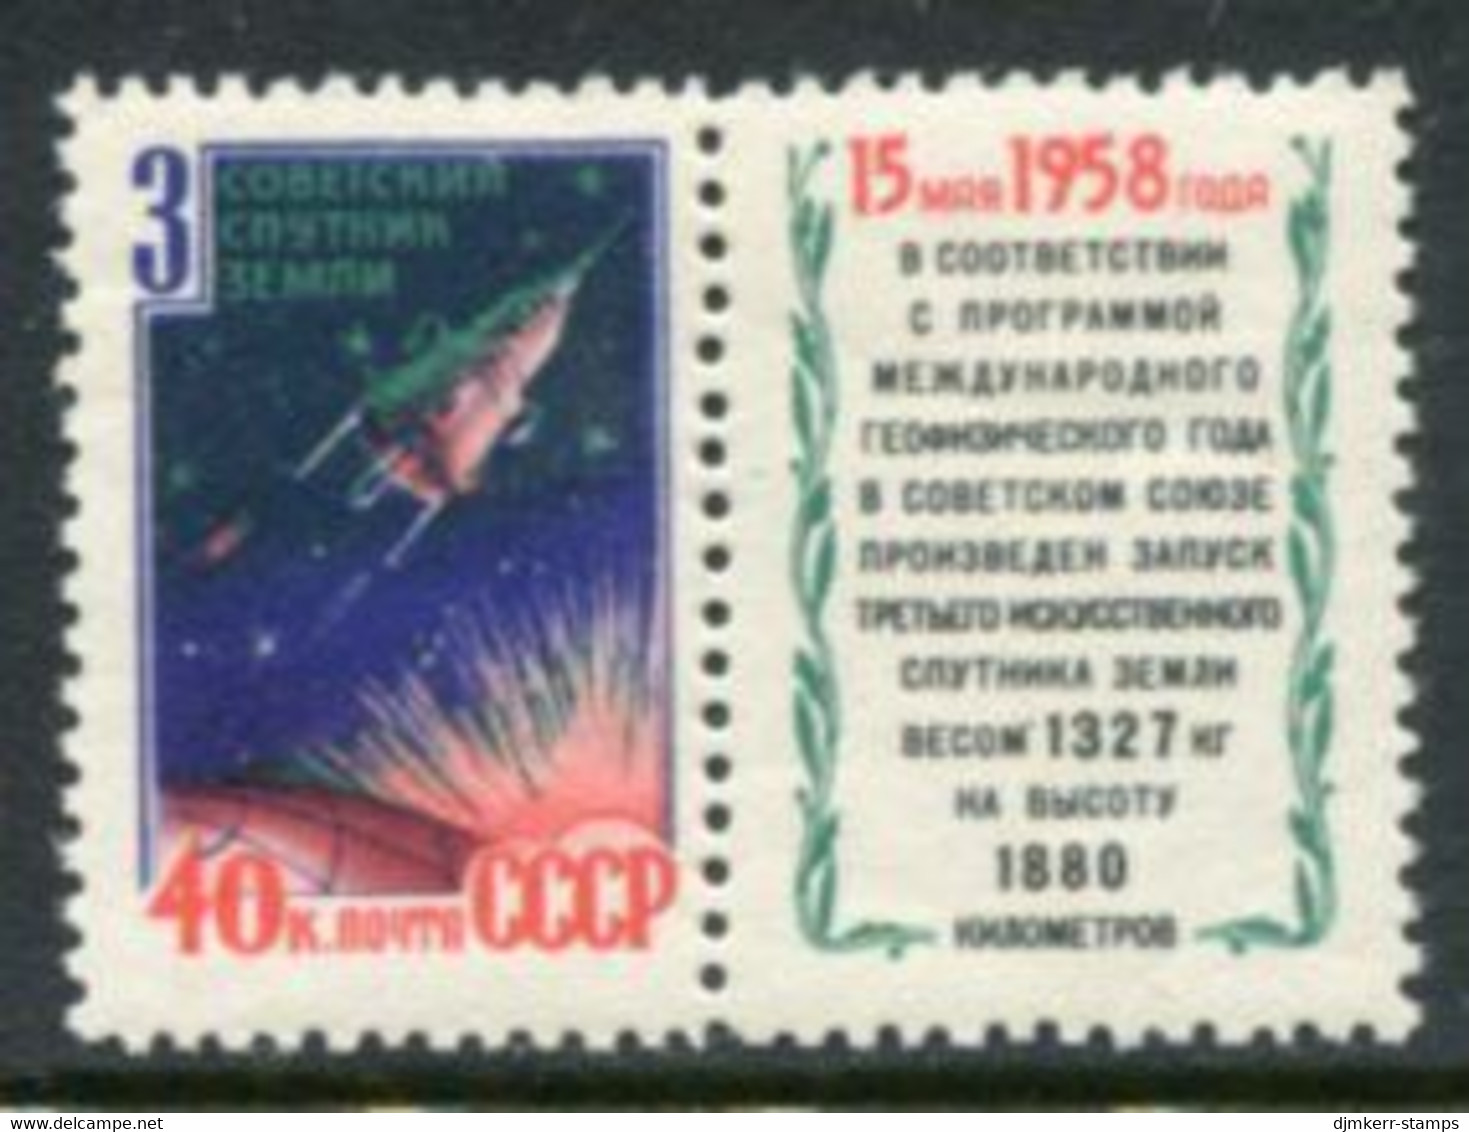 SOVIET UNION 1958 Launch Of Sputnik 3  MNH / **.  Michel 2101 Zf - Neufs